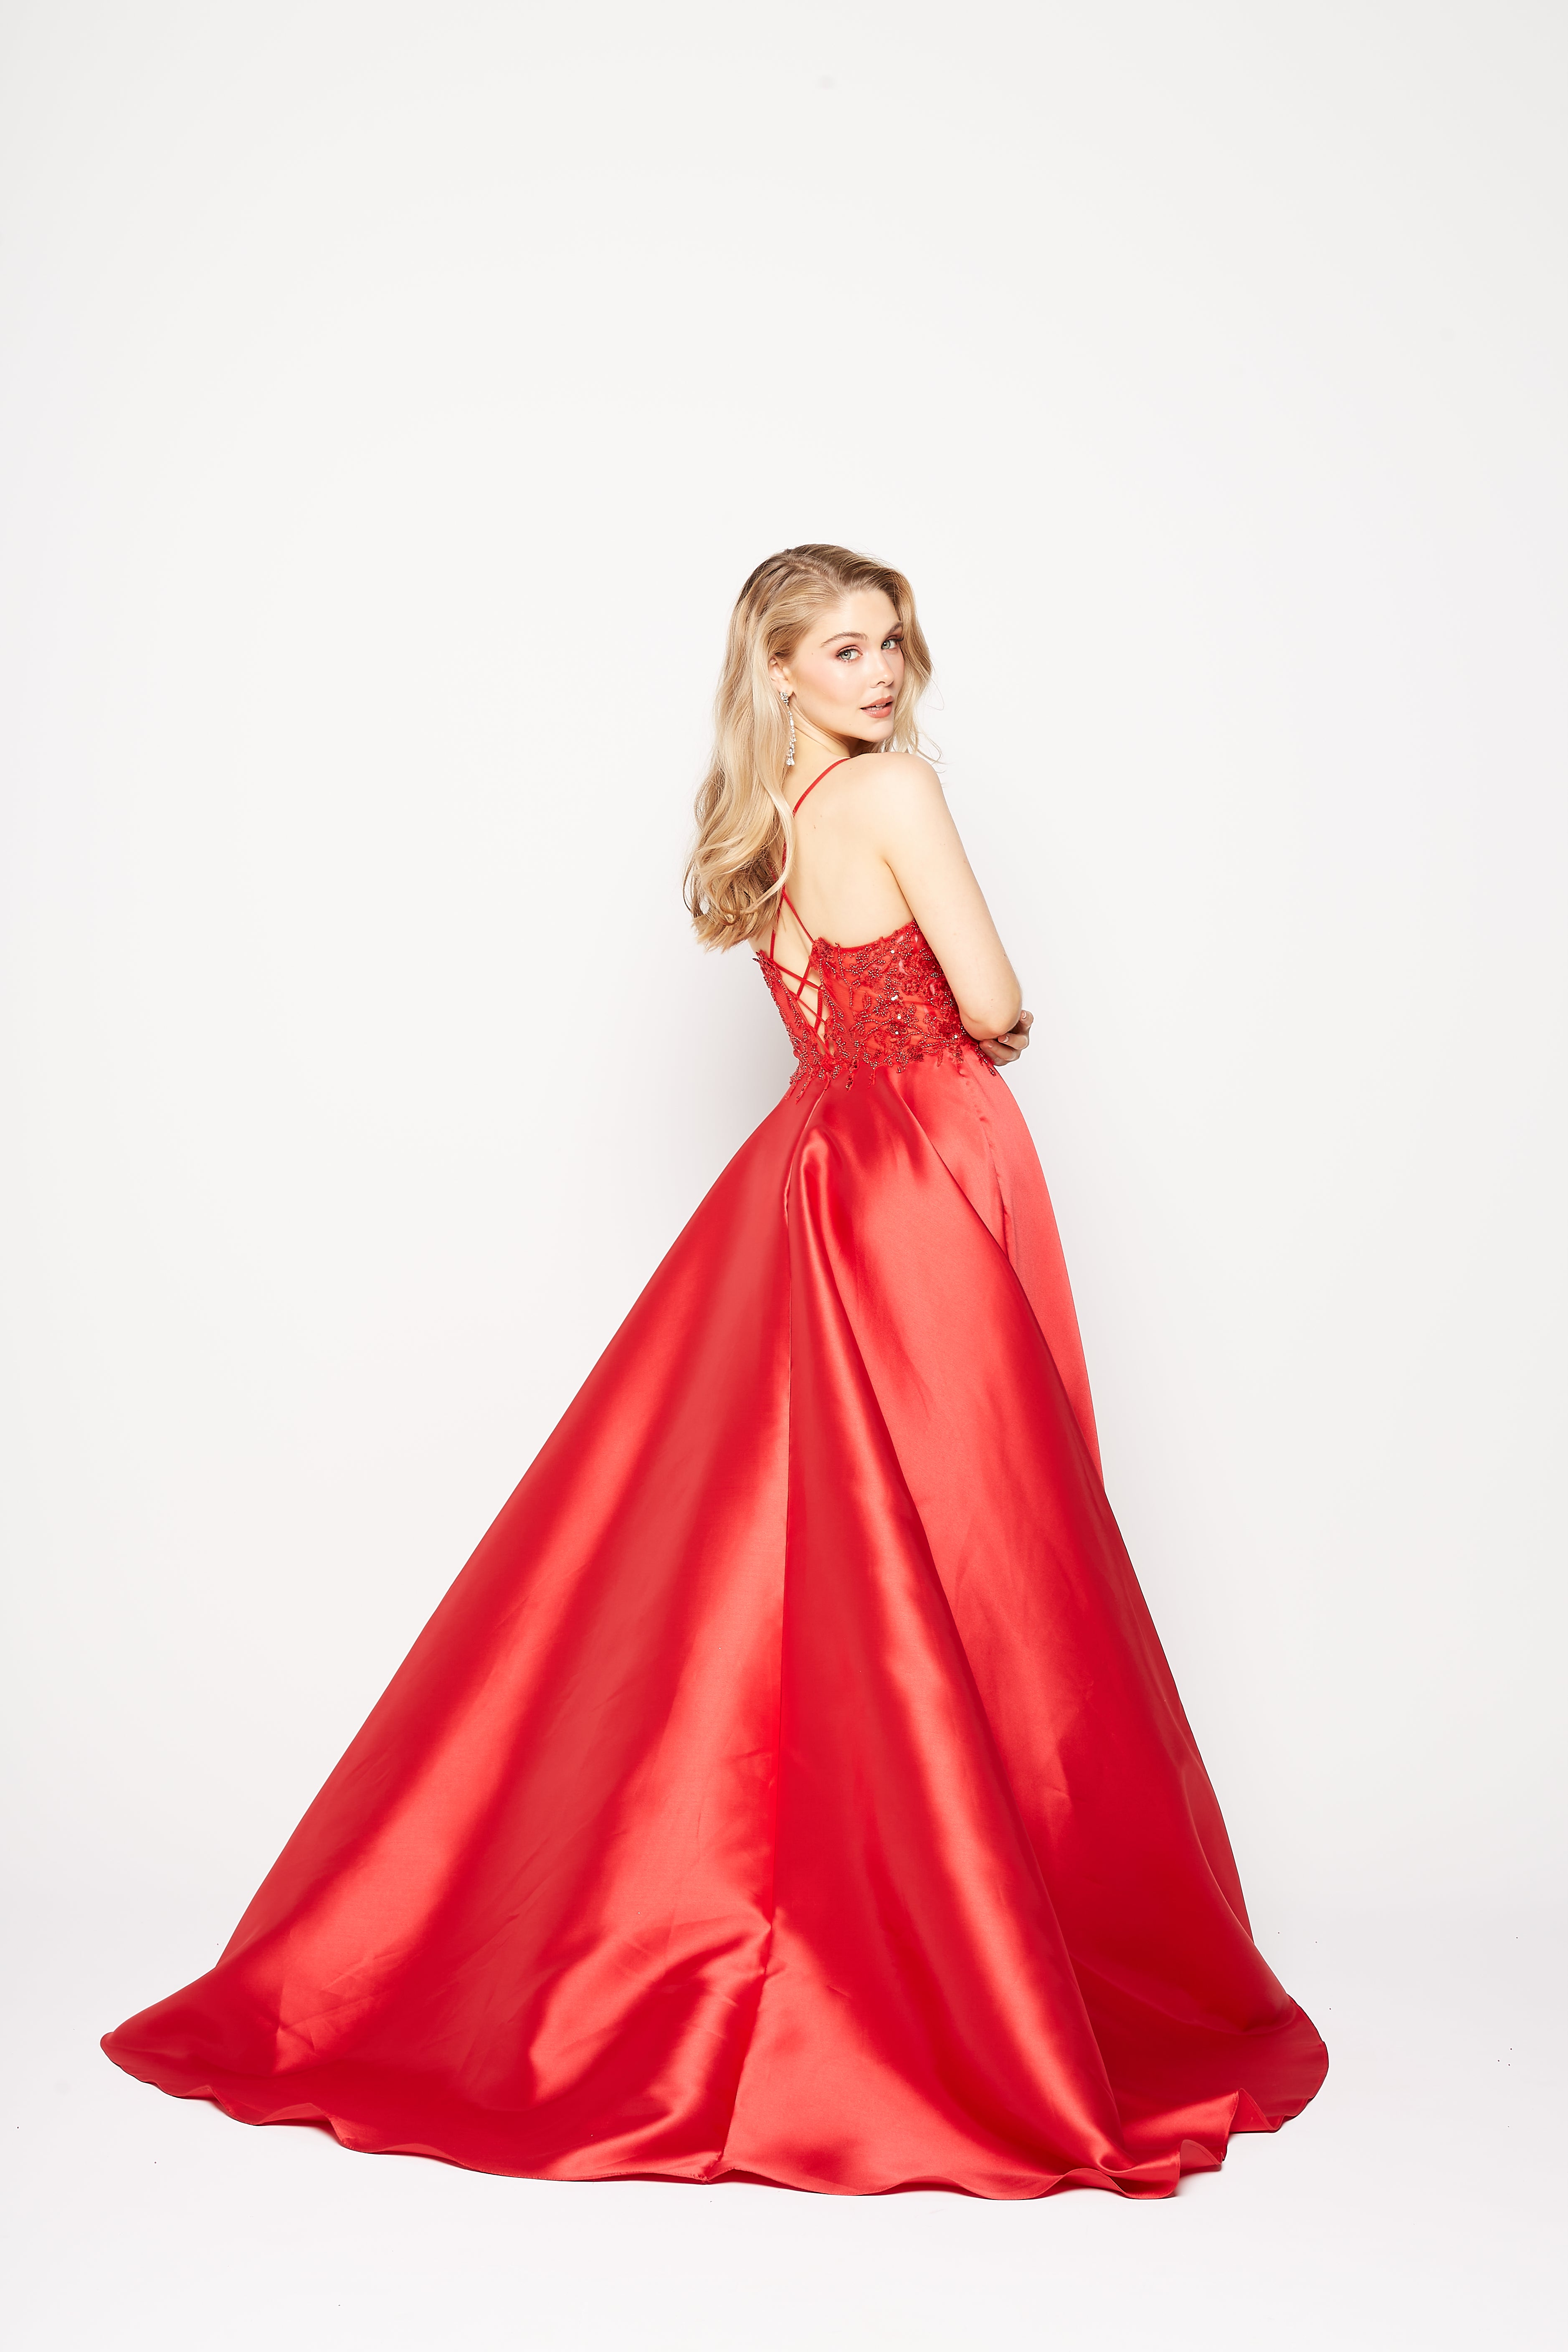 Jacinta PO2355 by Tania Olsen Emerald, Red, Cobalt Formal dress